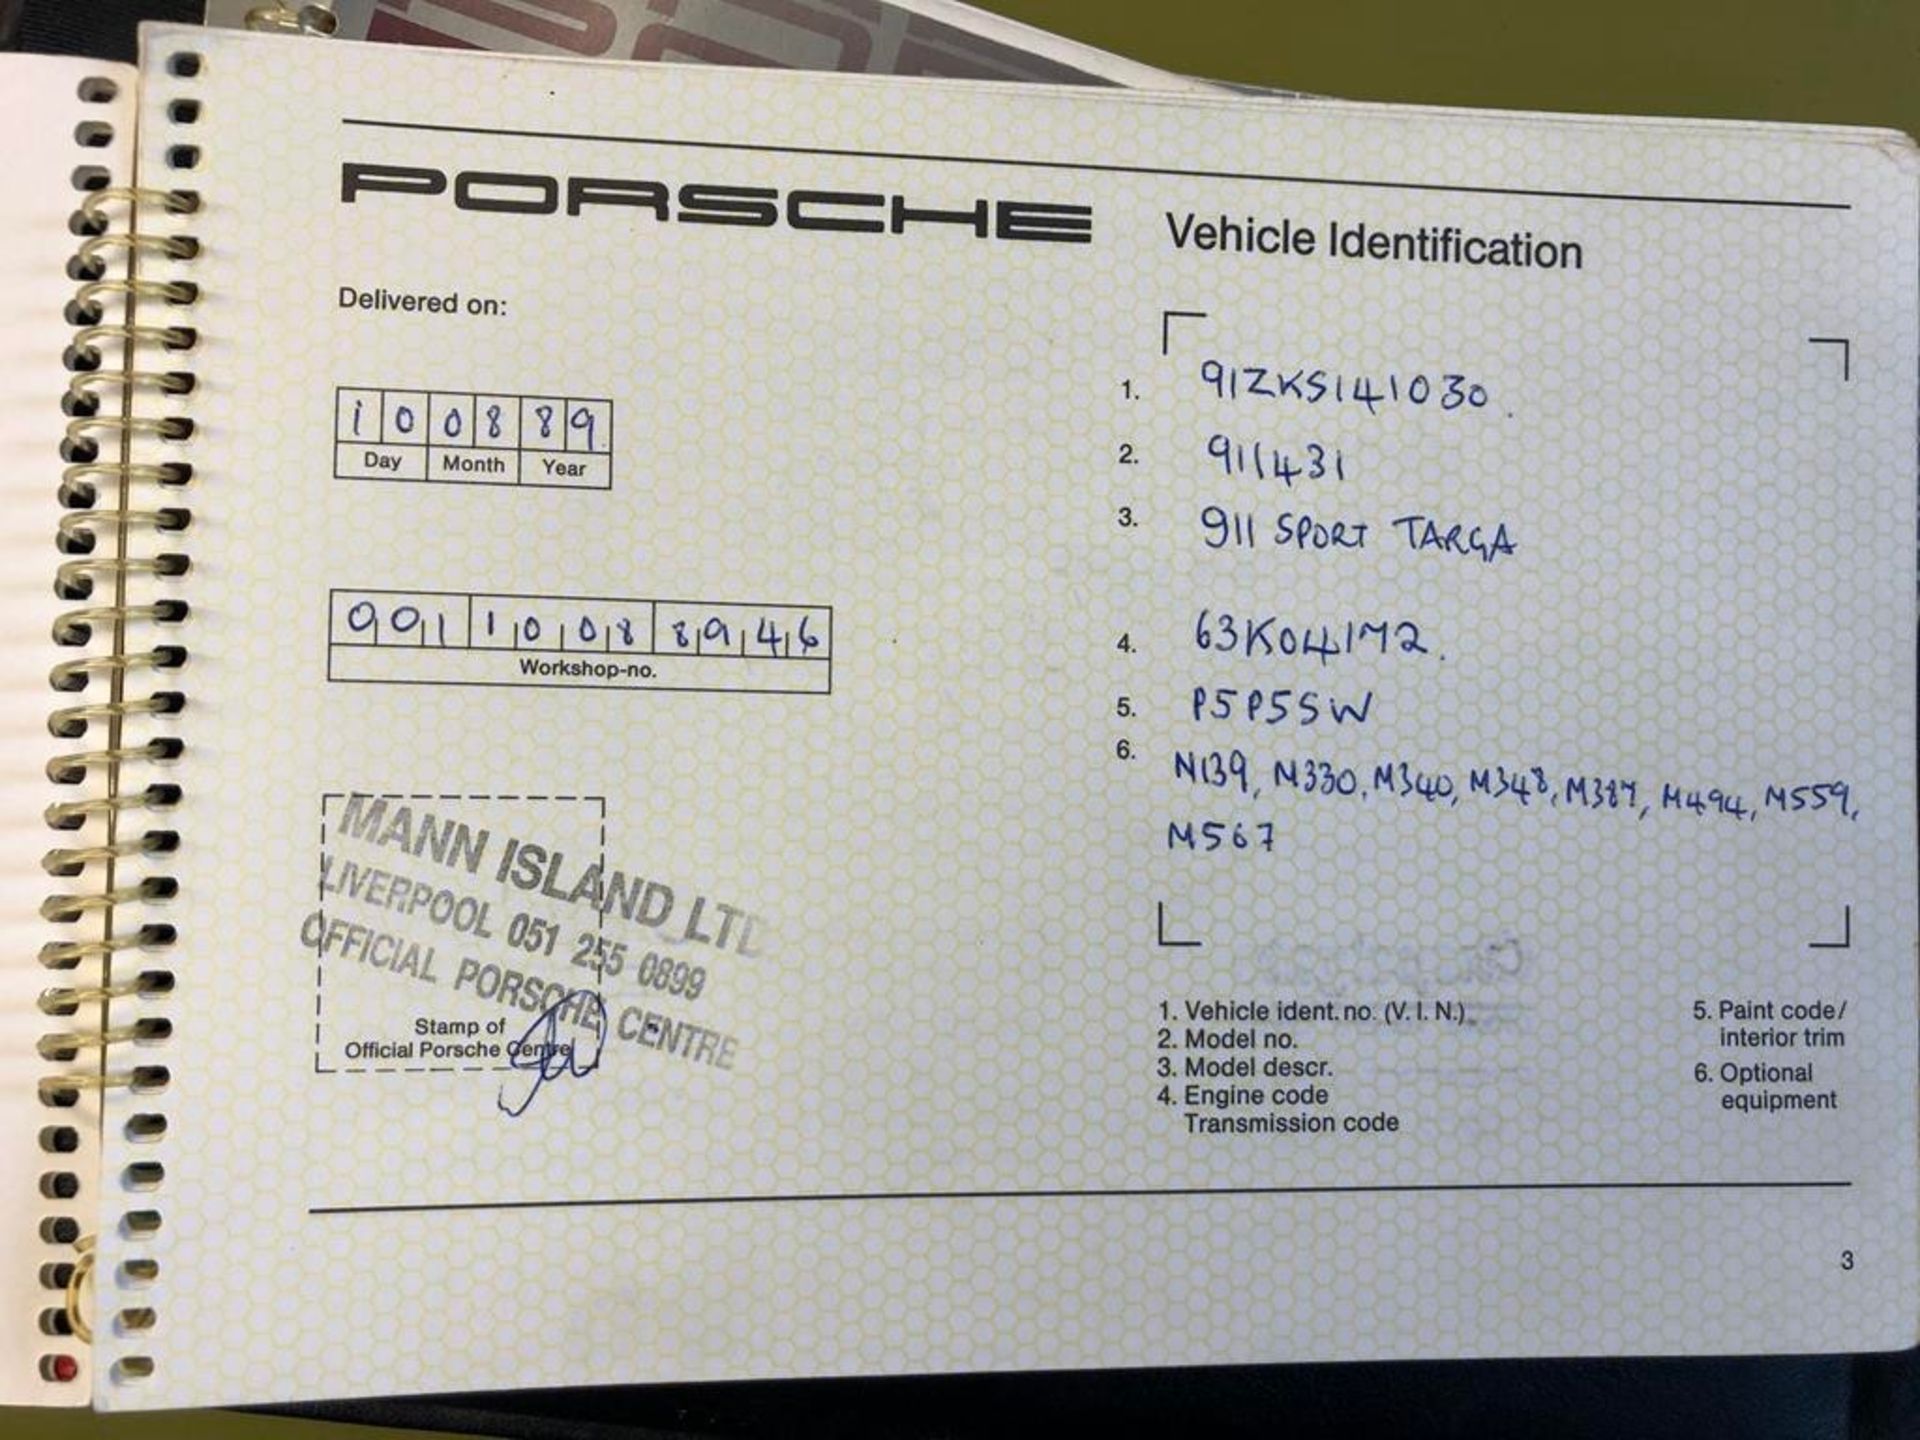 1989 Porsche 911 Sport Targa Registration number G743 GJT Chassis number WPOZZZ91ZKS141030 Grand - Image 20 of 81